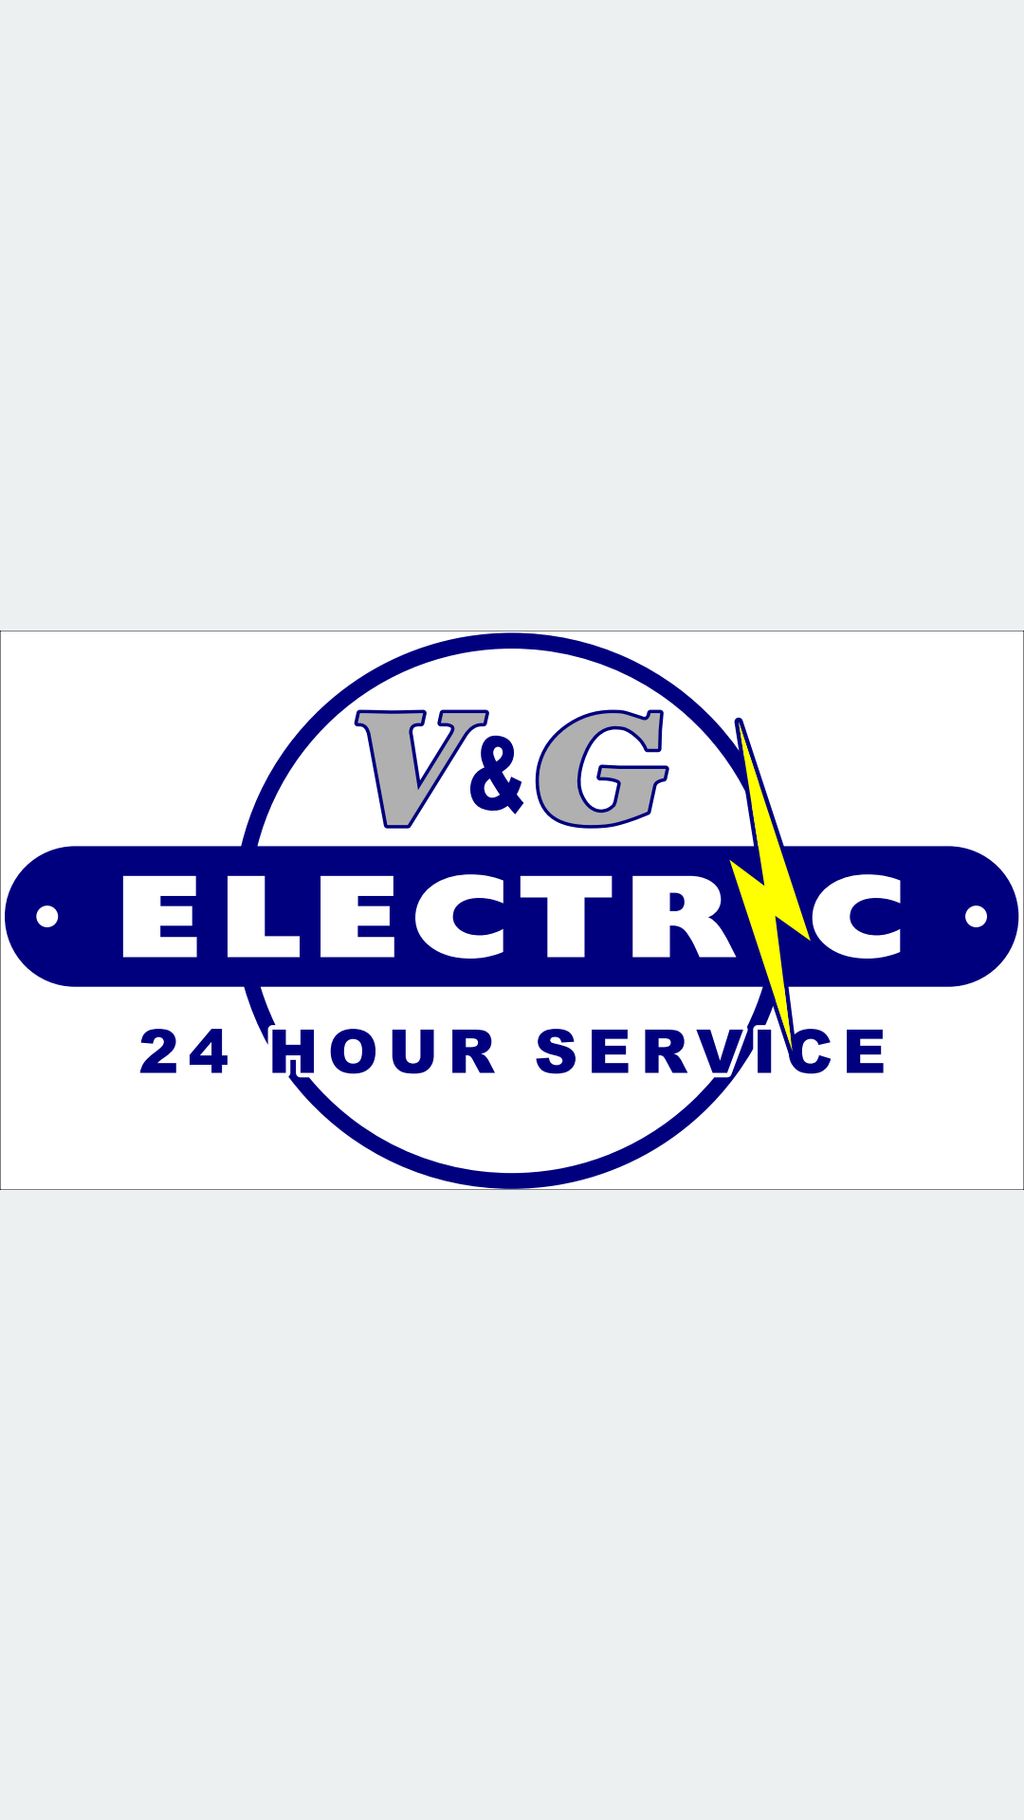 V & G Electric